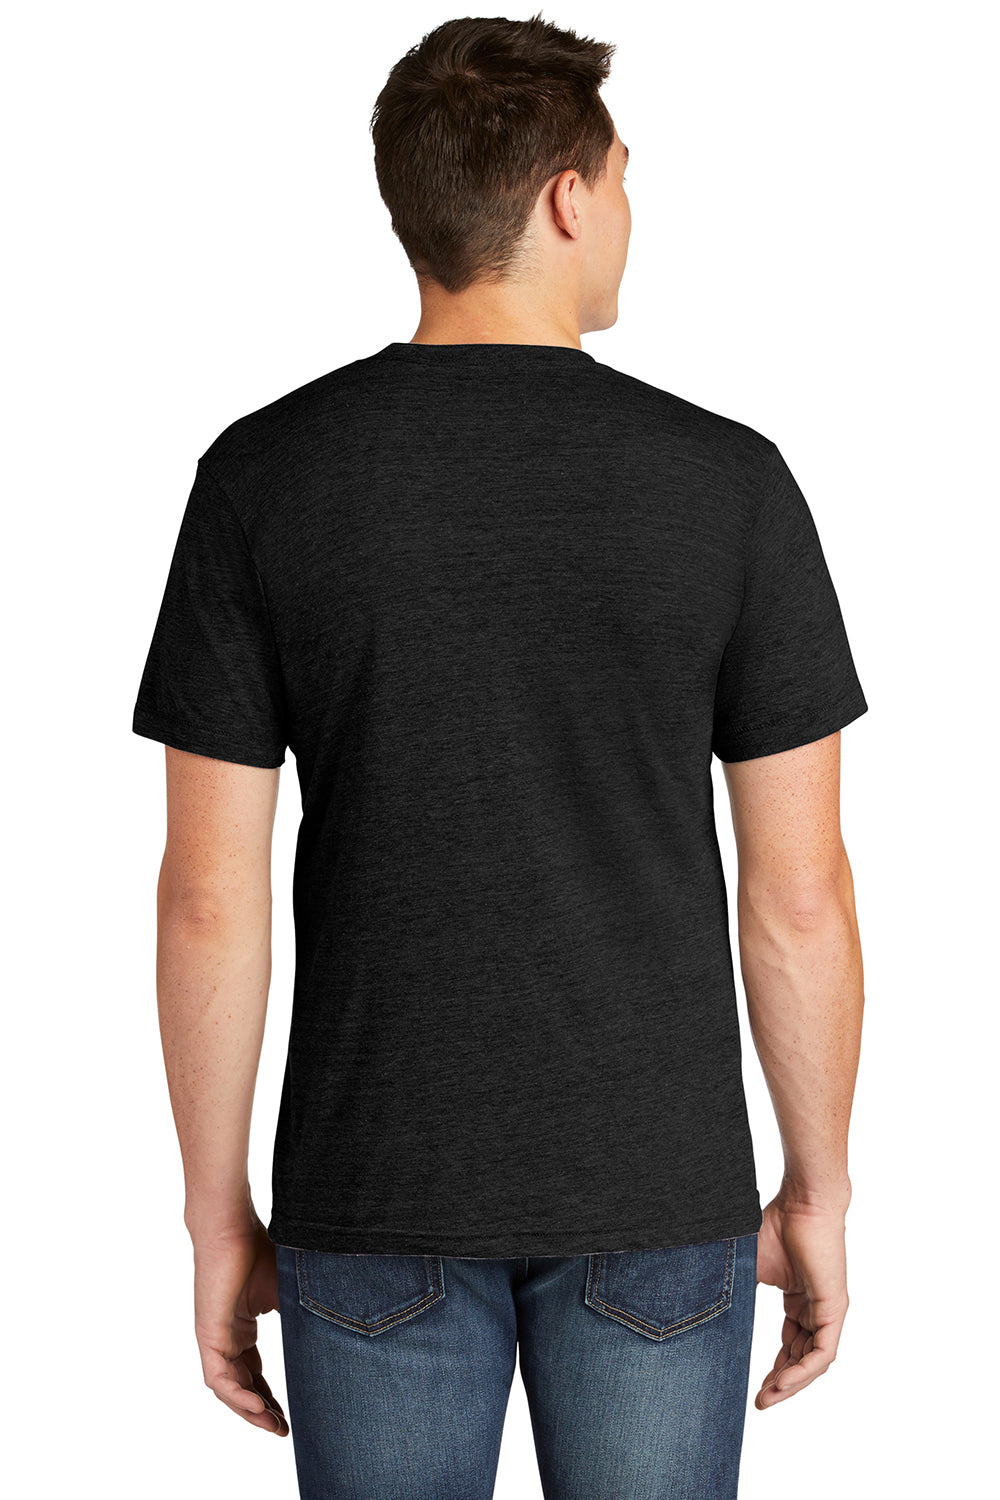 American Apparel TR401 Mens Track Short Sleeve Crewneck T-Shirt Black Model Back